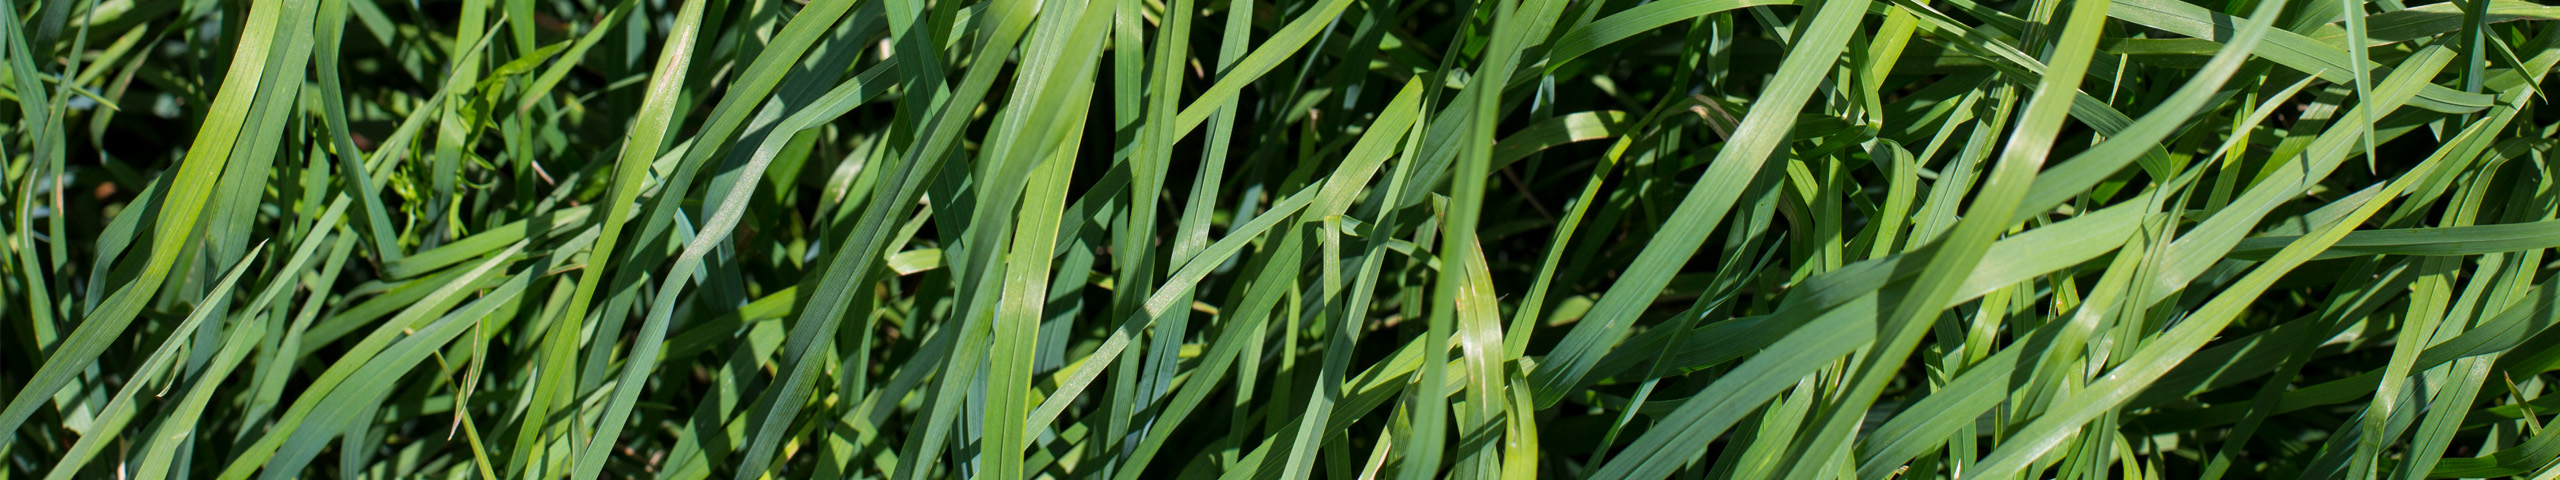 Close up of cocksfoot grass growing